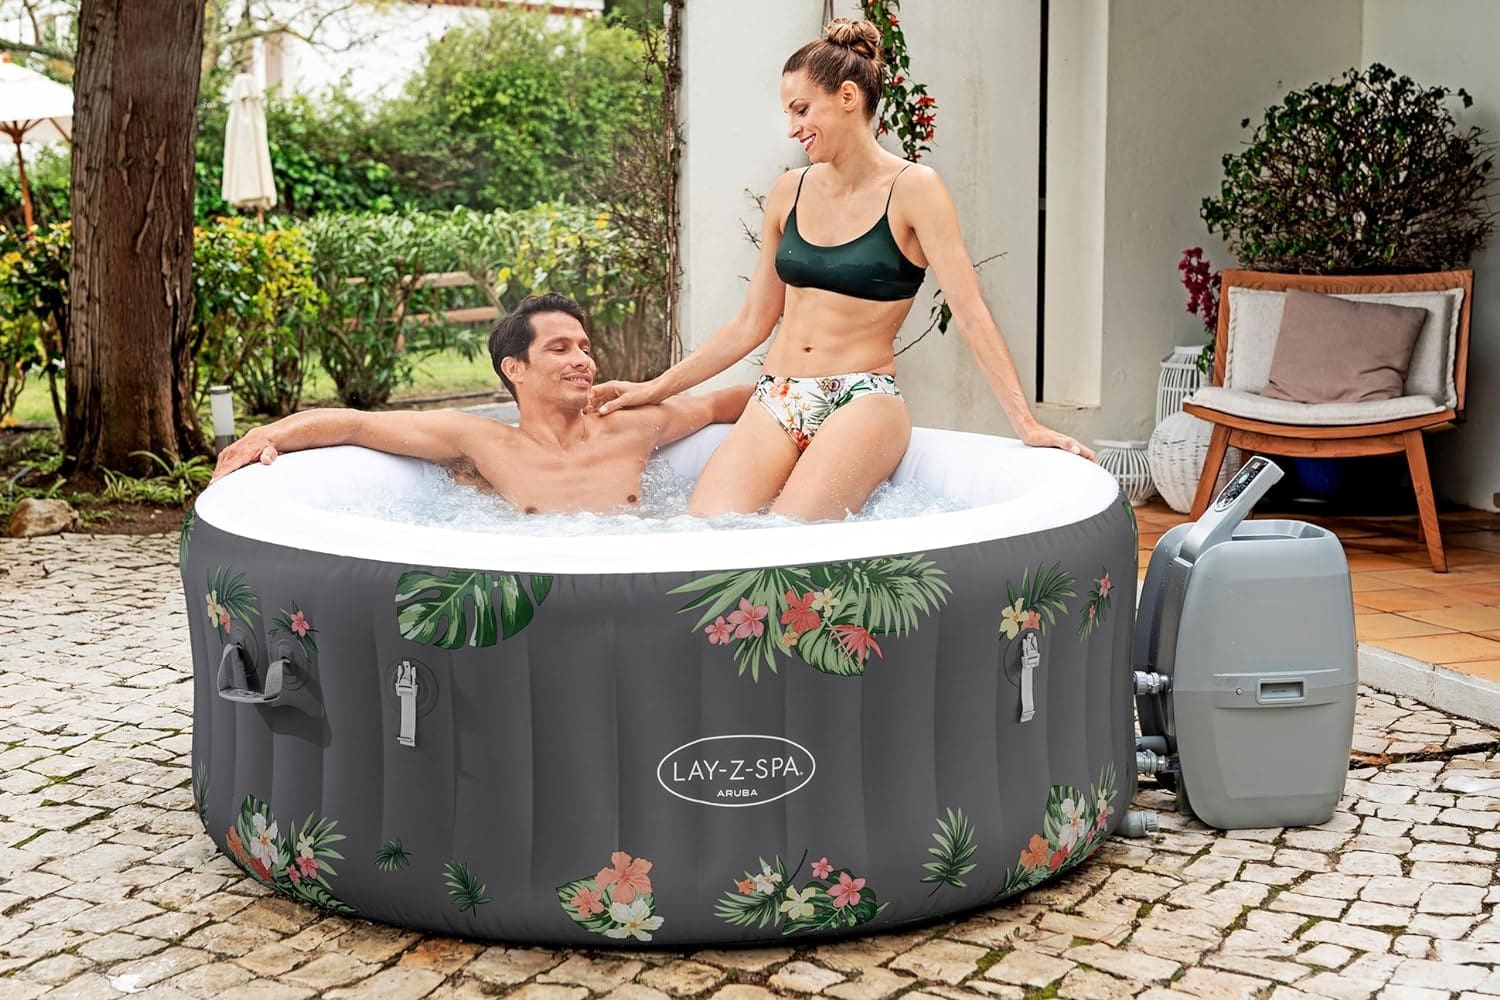 Lay-Z-Spa Aruba Hot Tub - 2-3 Person Inflatable Hot Tub